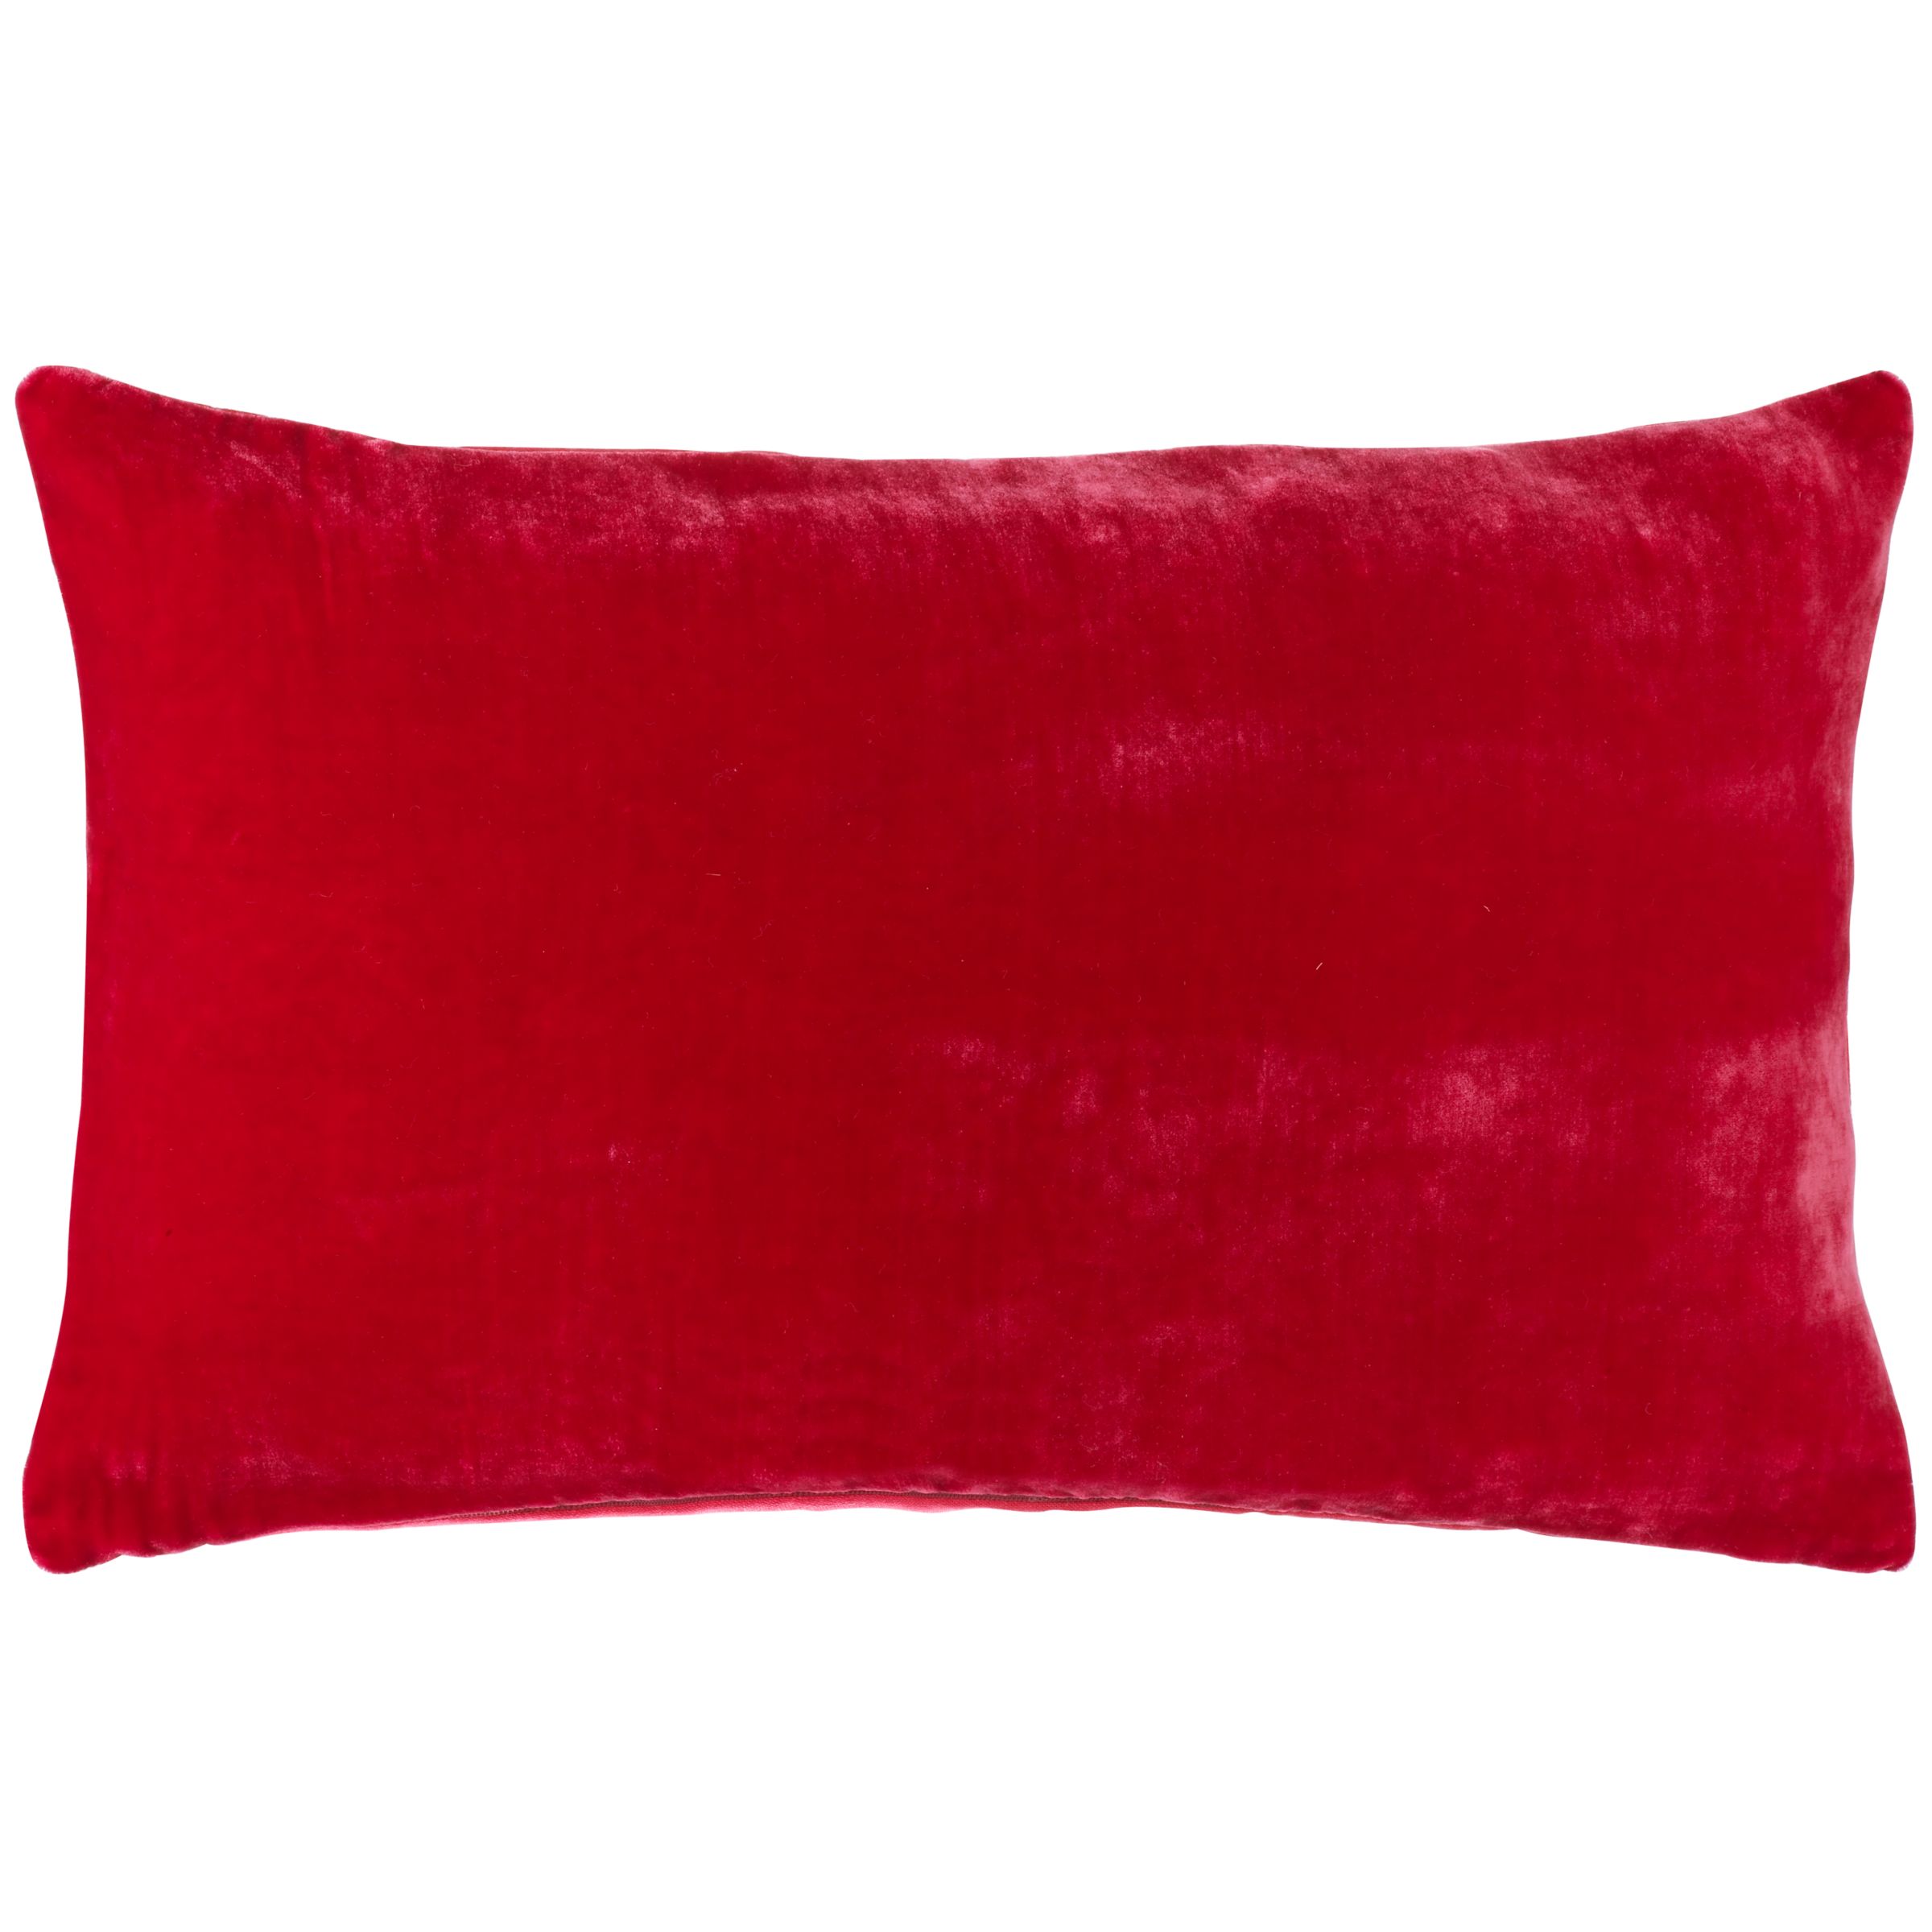 John Lewis Tivoli Cushion, Raspberry, One size